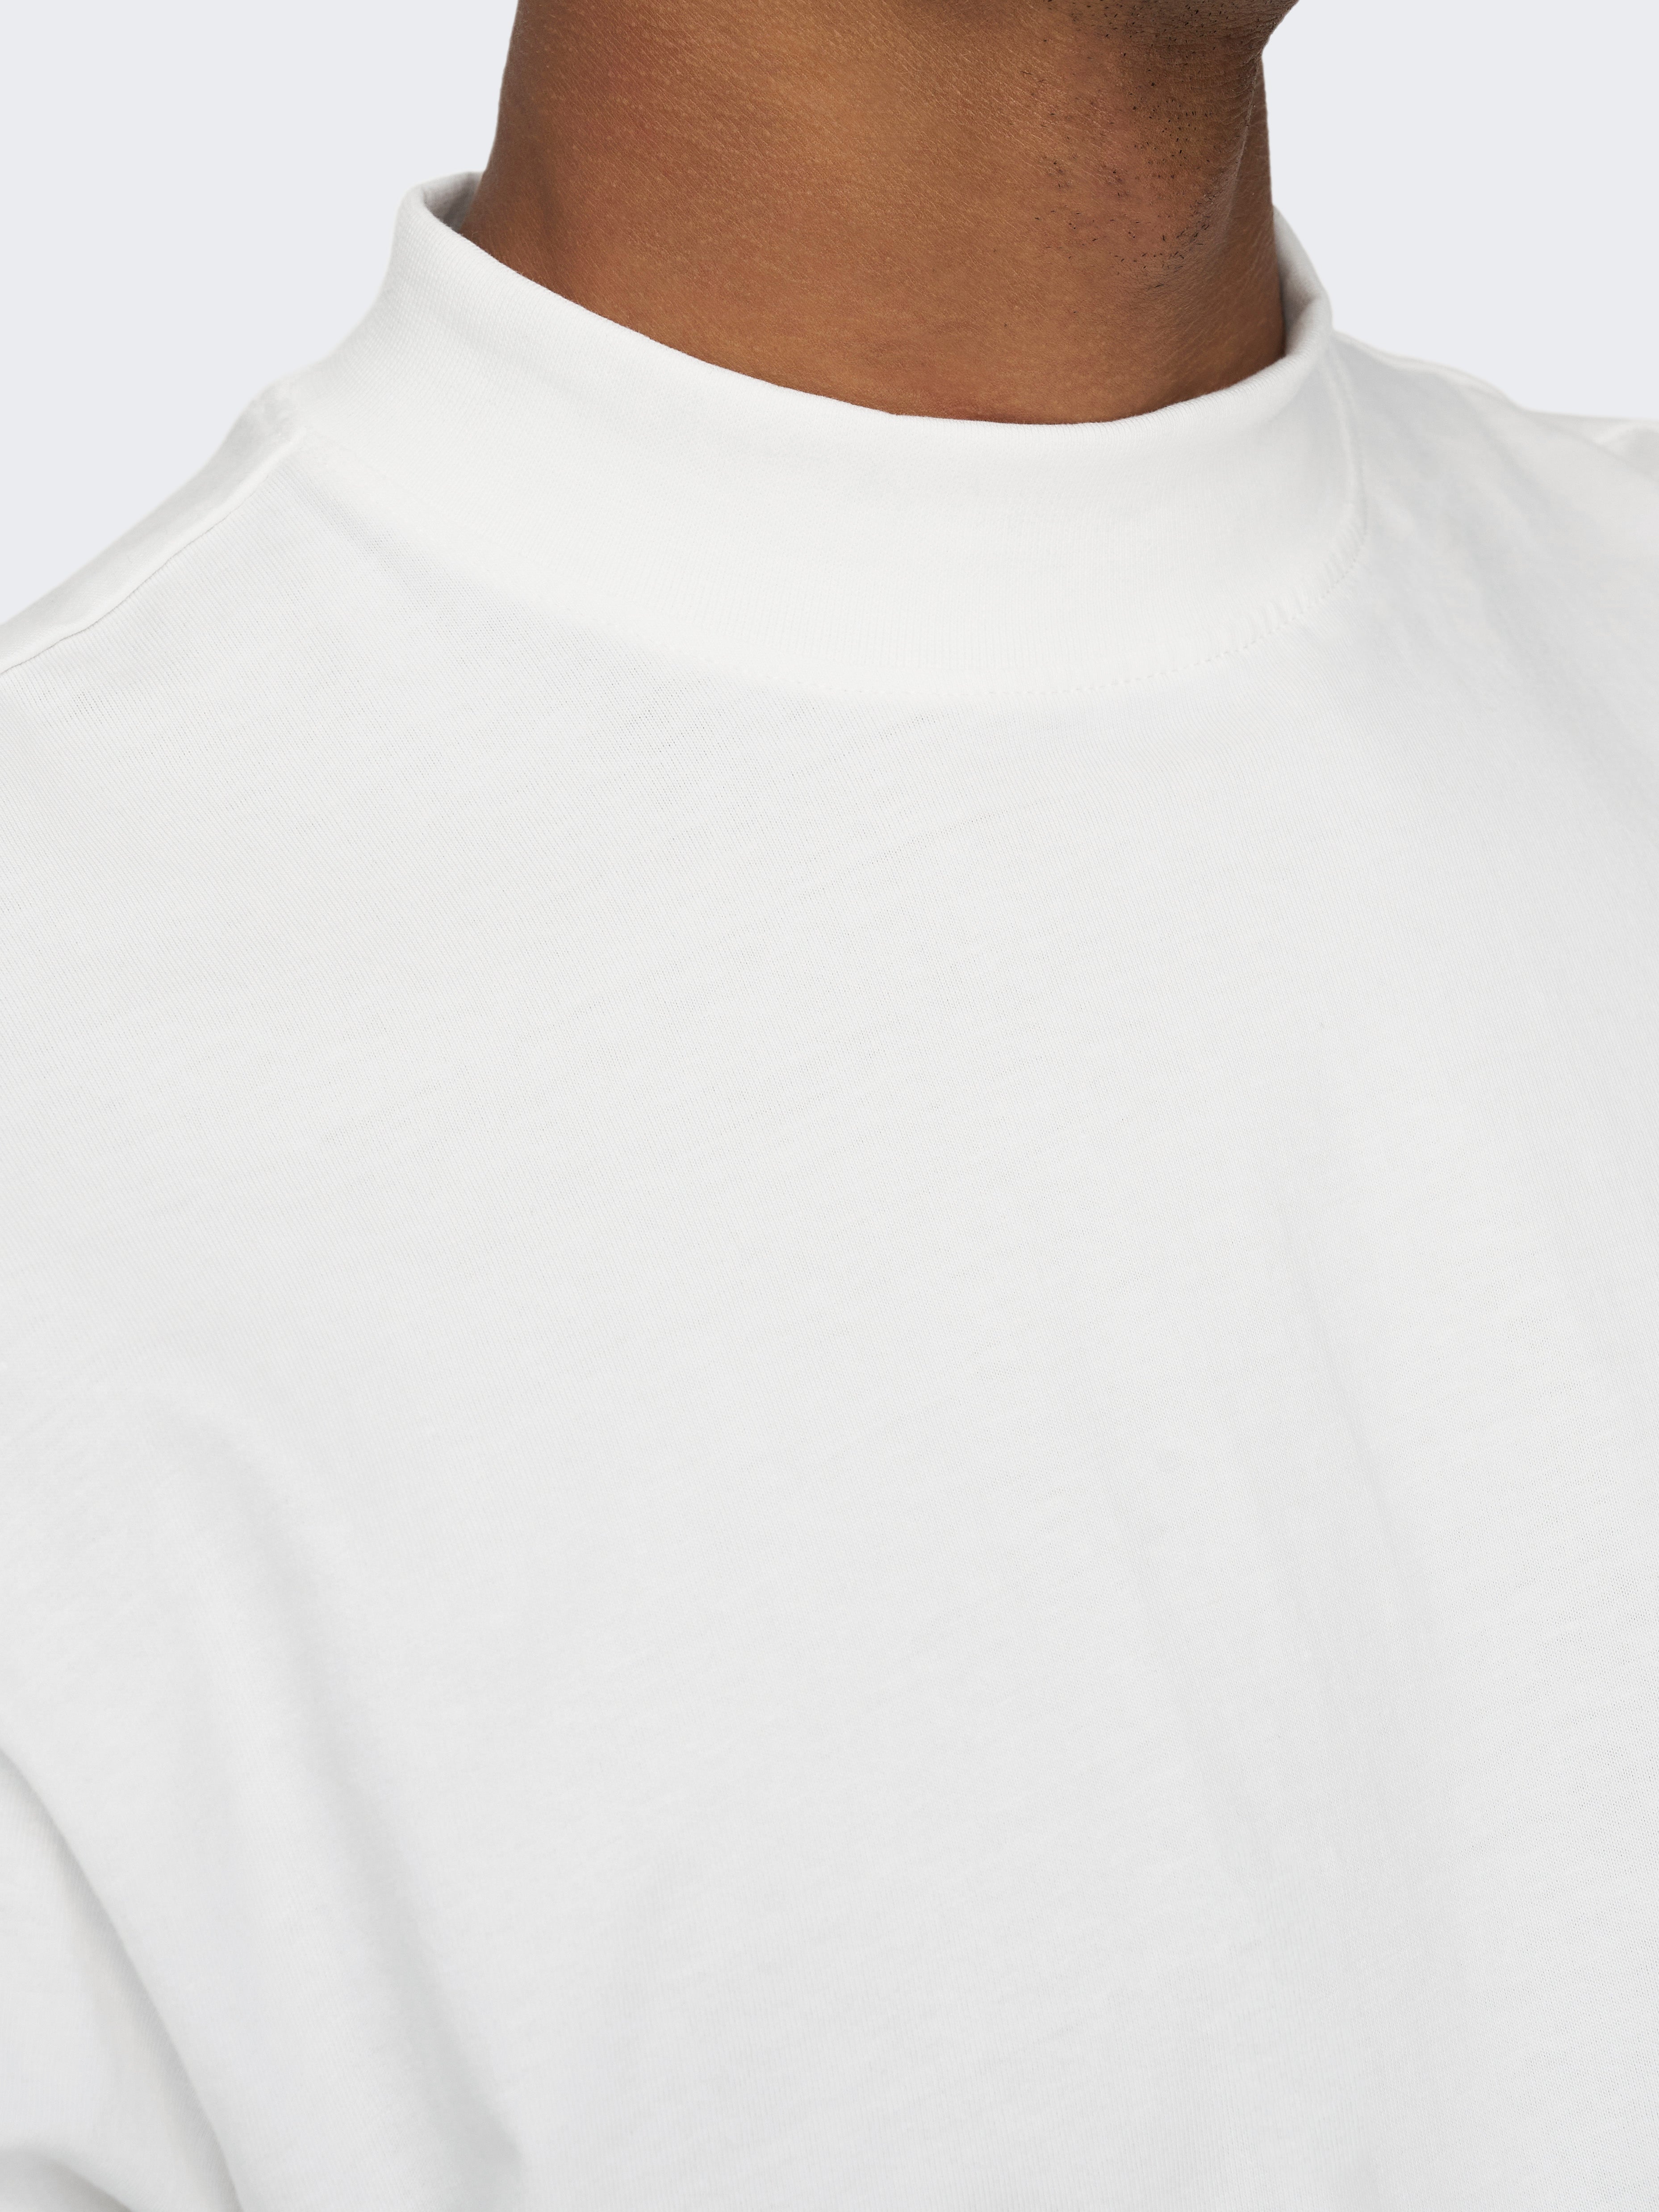 T-Shirt Weiß | Stehkragen SONS® geschnitten ONLY Locker & |